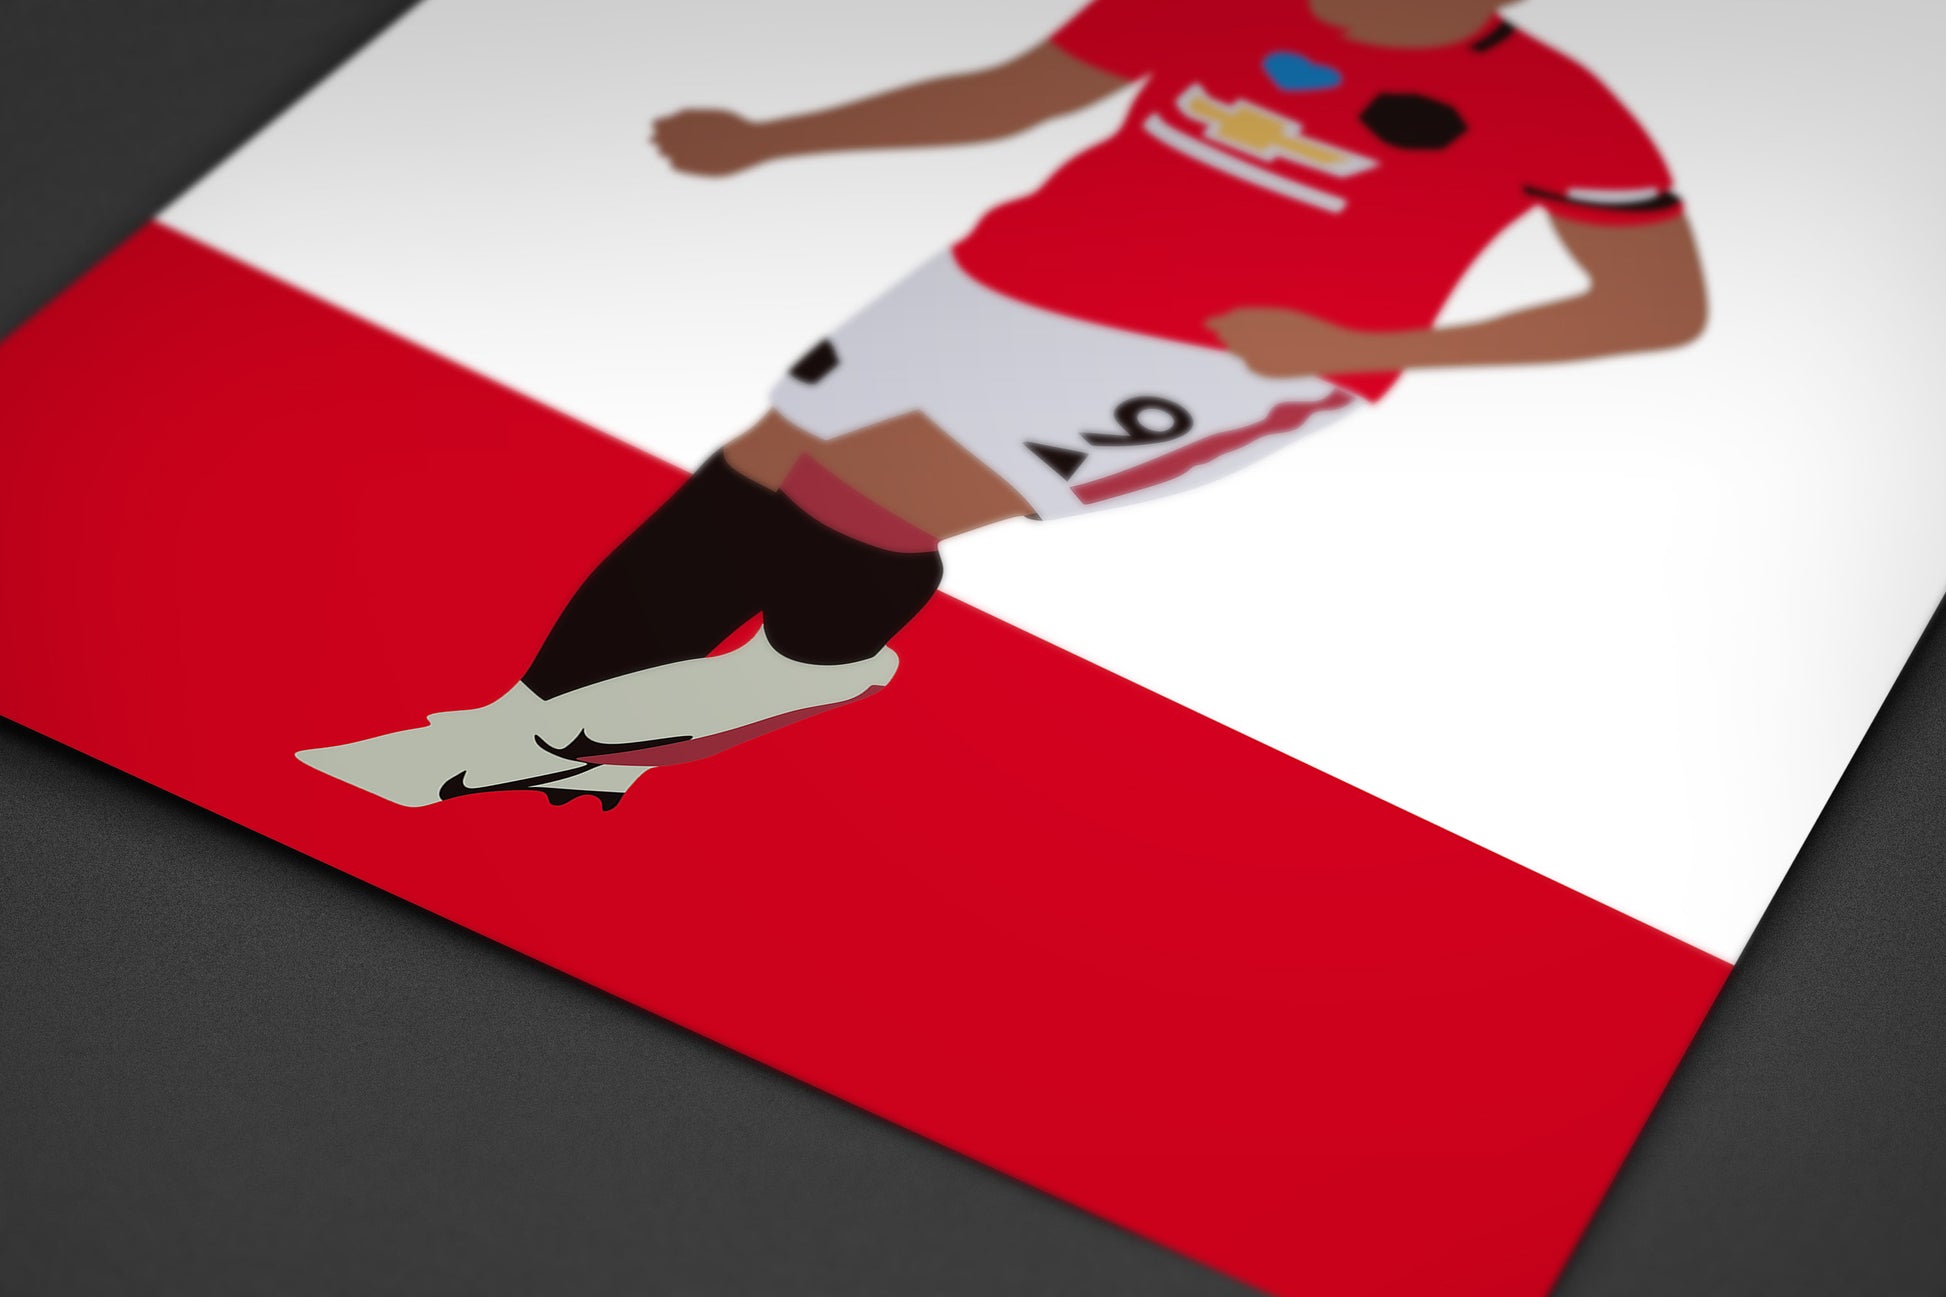 Anthony Minimalist Art Print Poster Gift Idea For Him | Football Print | Soccer| Gift for Husband Boyfriend